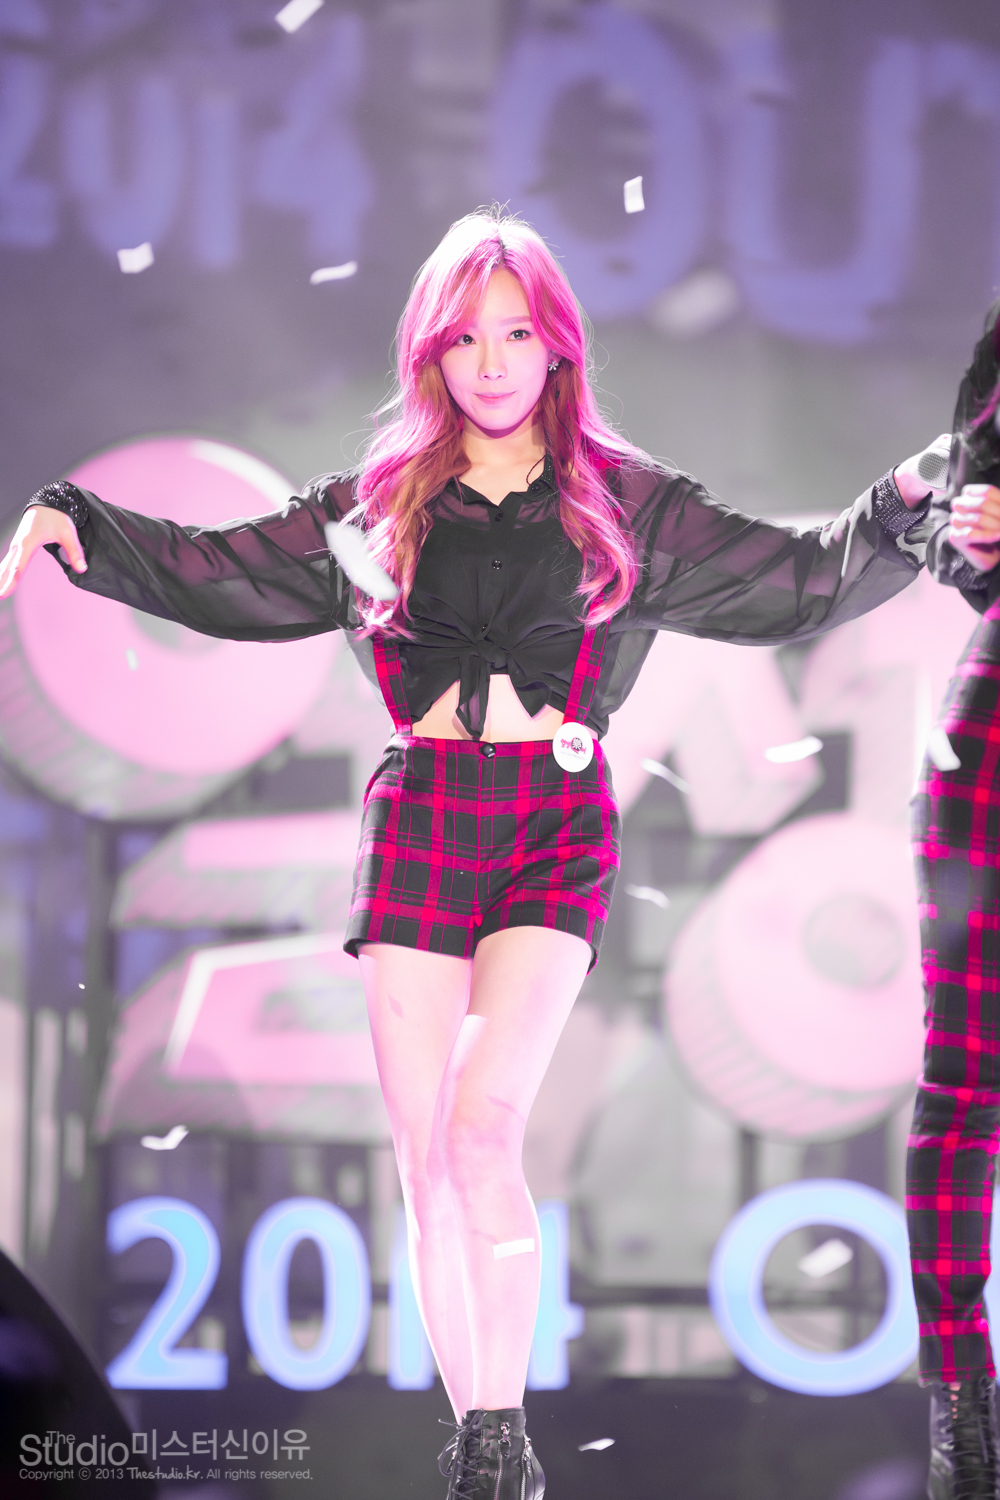 [PIC][11-11-2014]TaeTiSeo biểu diễn tại "Passion Concert 2014" ở Seoul Jamsil Gymnasium vào tối nay - Page 4 241B1A495462E1F50F3E6E